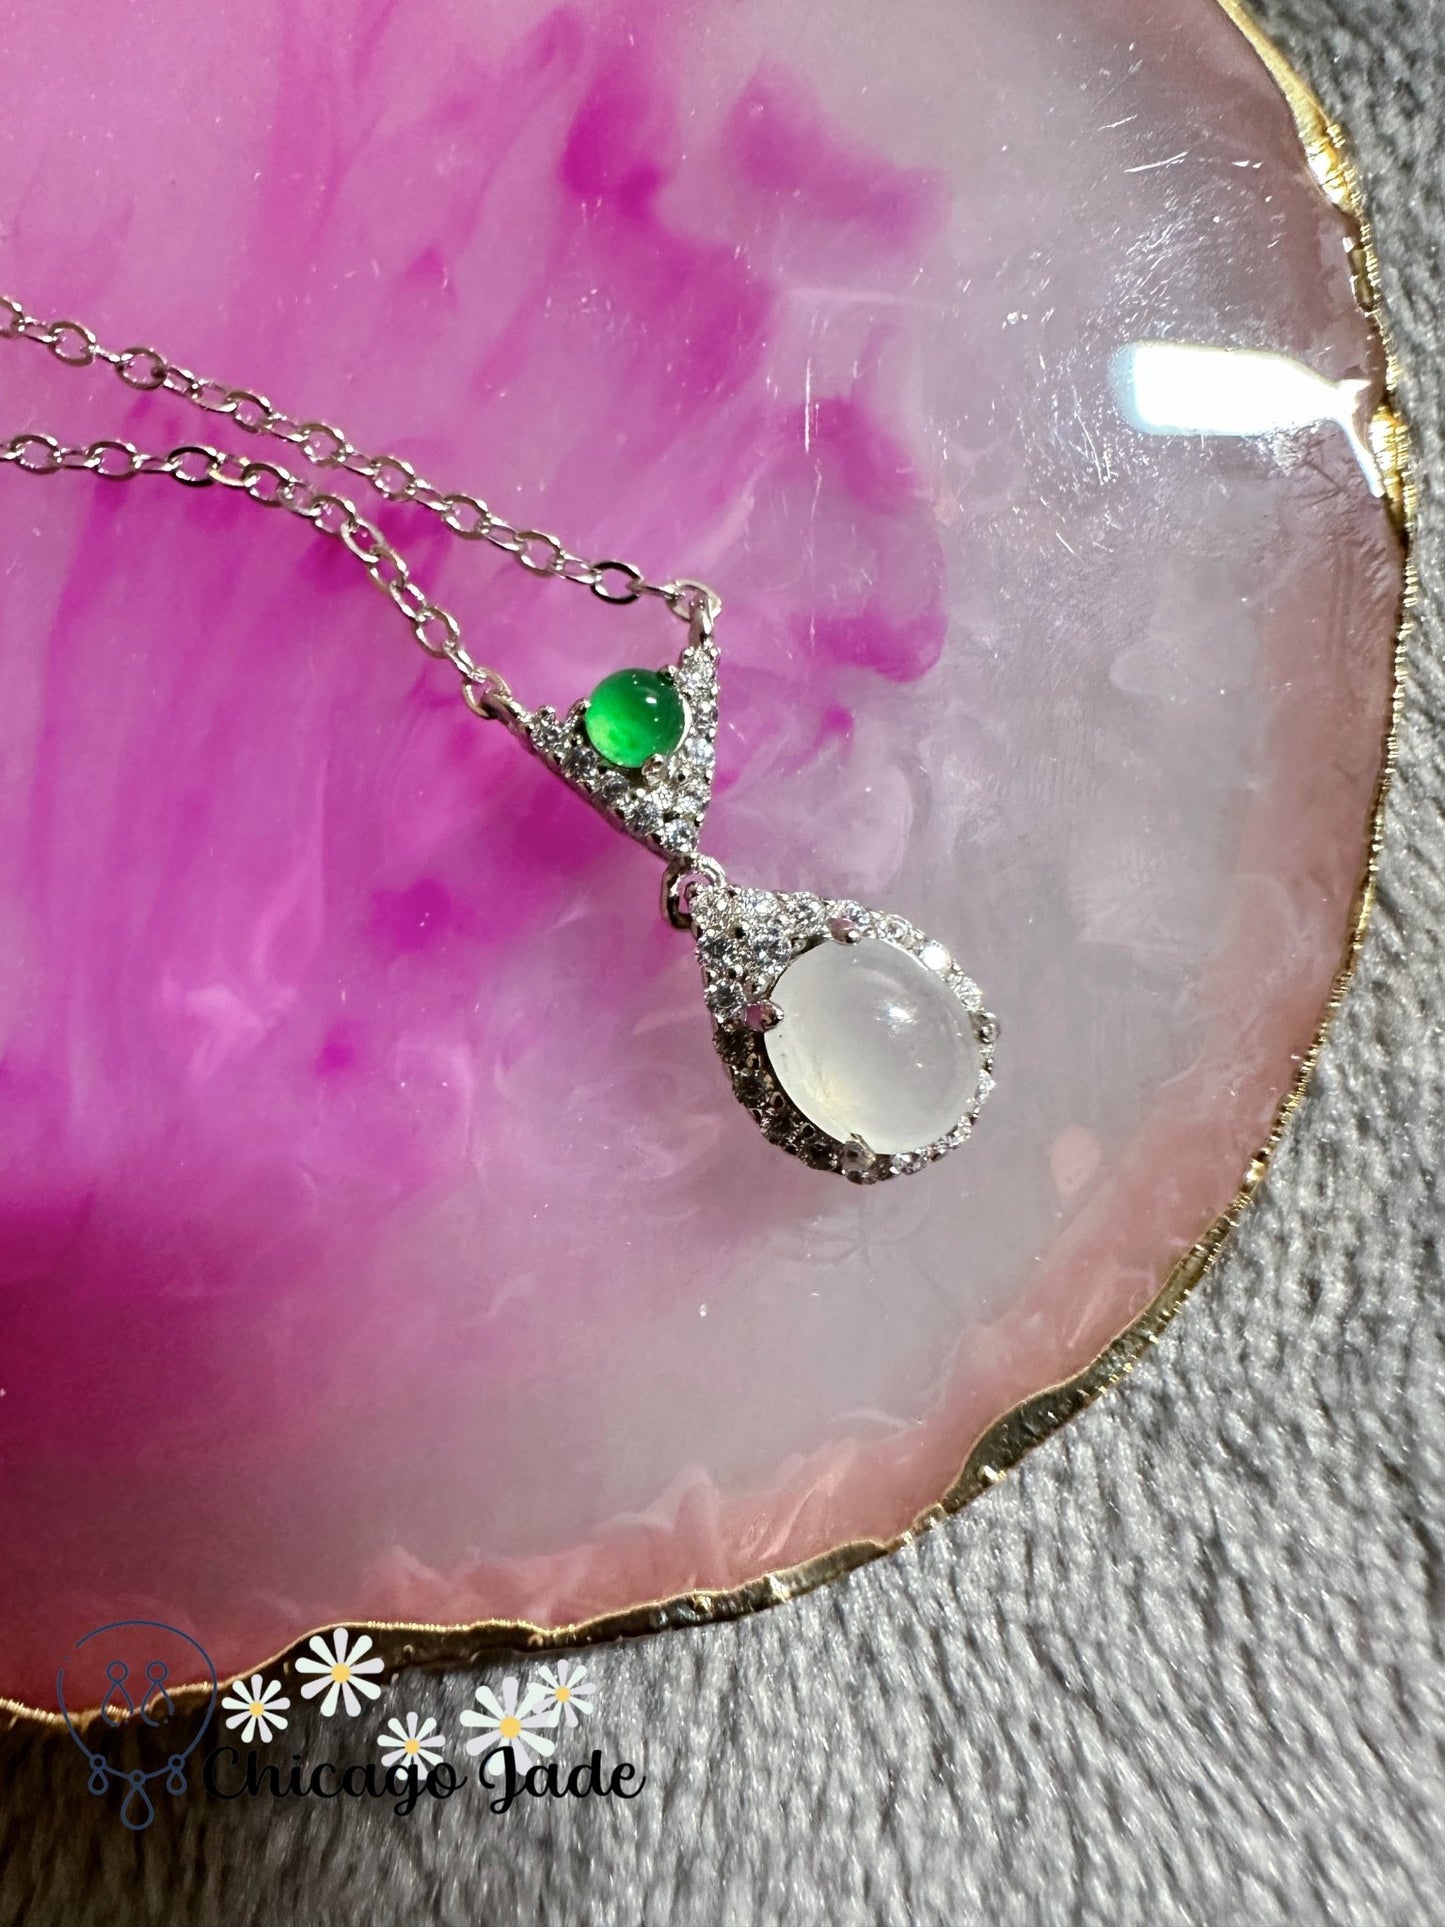 Large droplet shape jadeite jade stone necklace sterling S925 silver - Chicago Jadeanniversarybirthday giftcharmChicago Jade